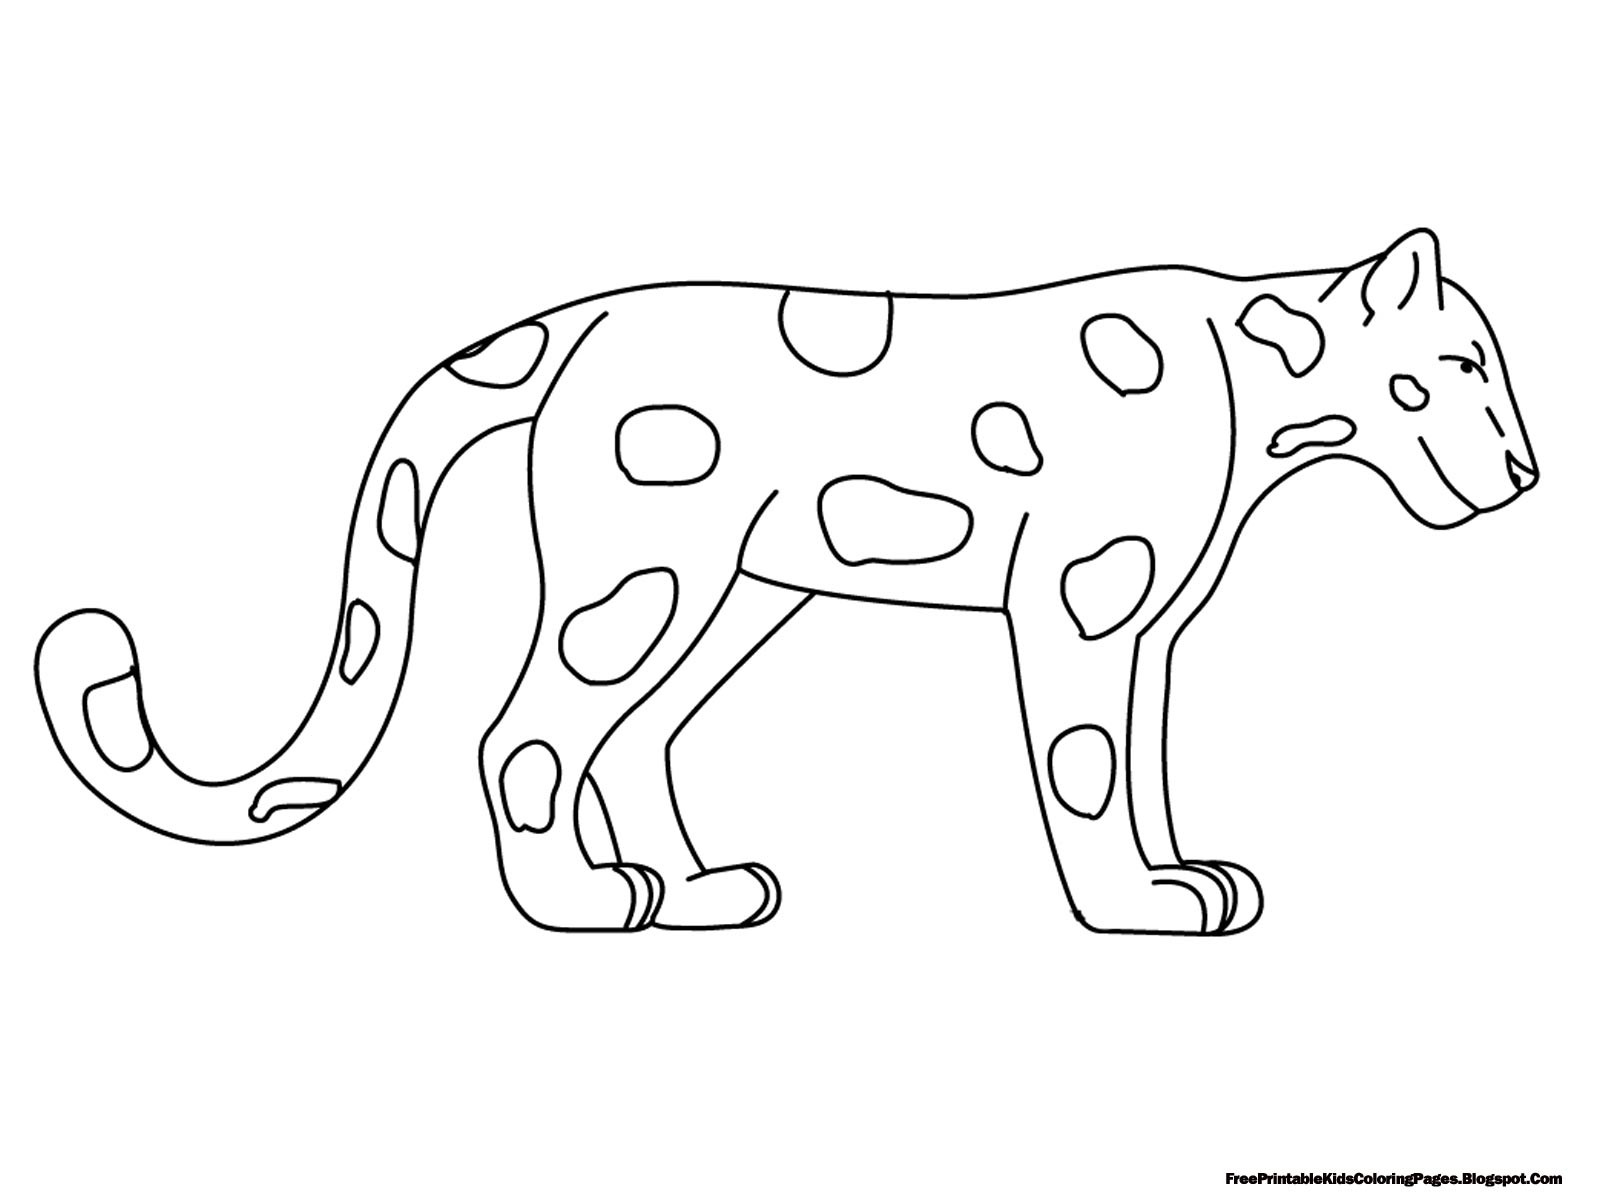 Coloring Pages For Kids Animals
 Jaguar Coloring Pages Free Printable Kids Coloring Pages